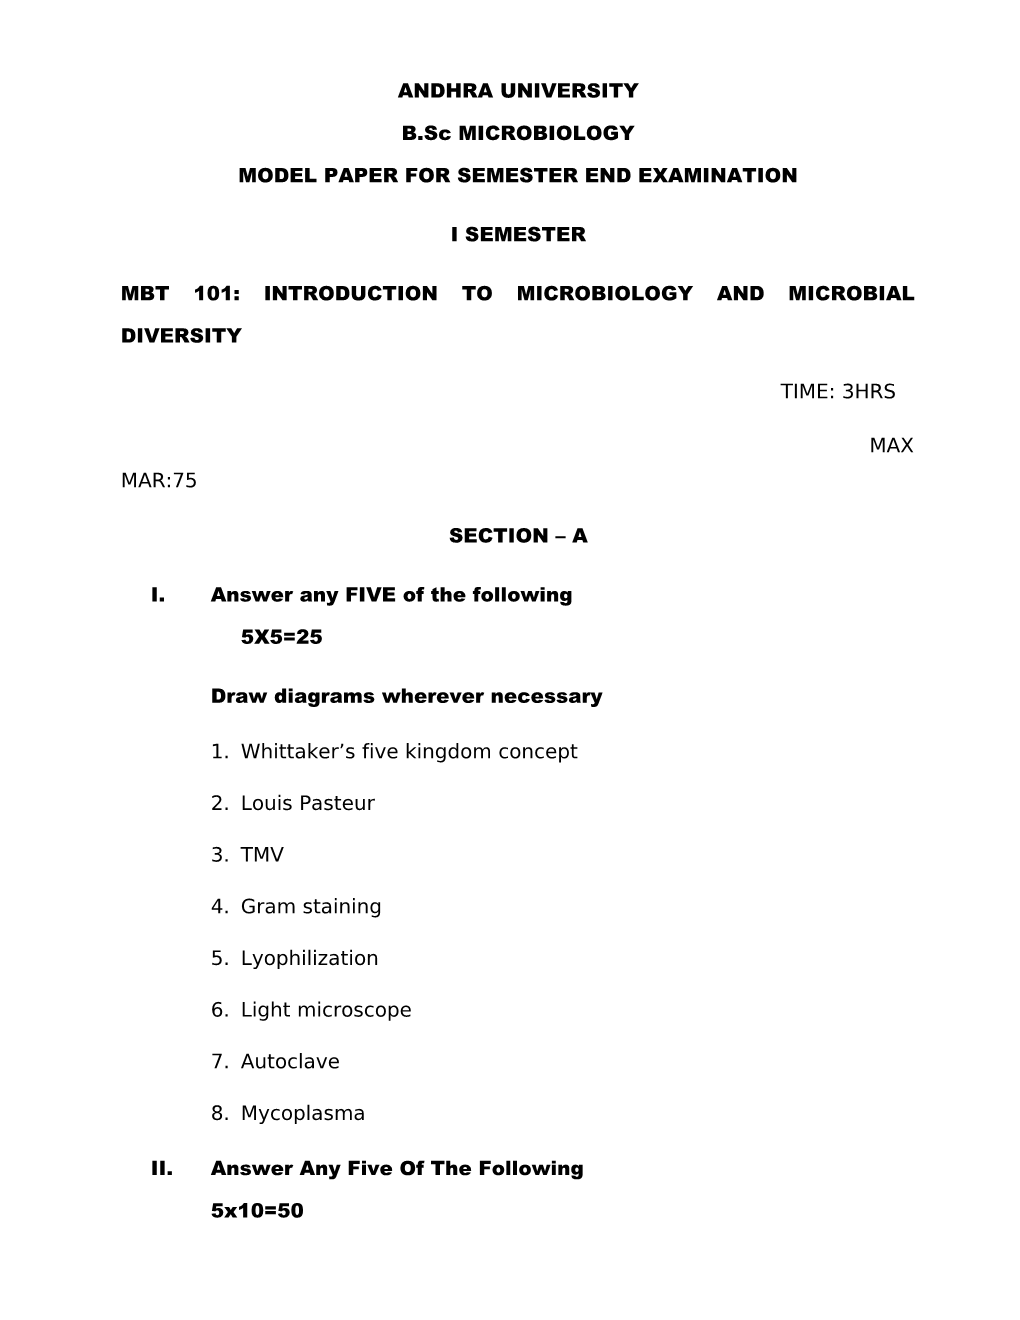 Model Paper for Semester End Examination